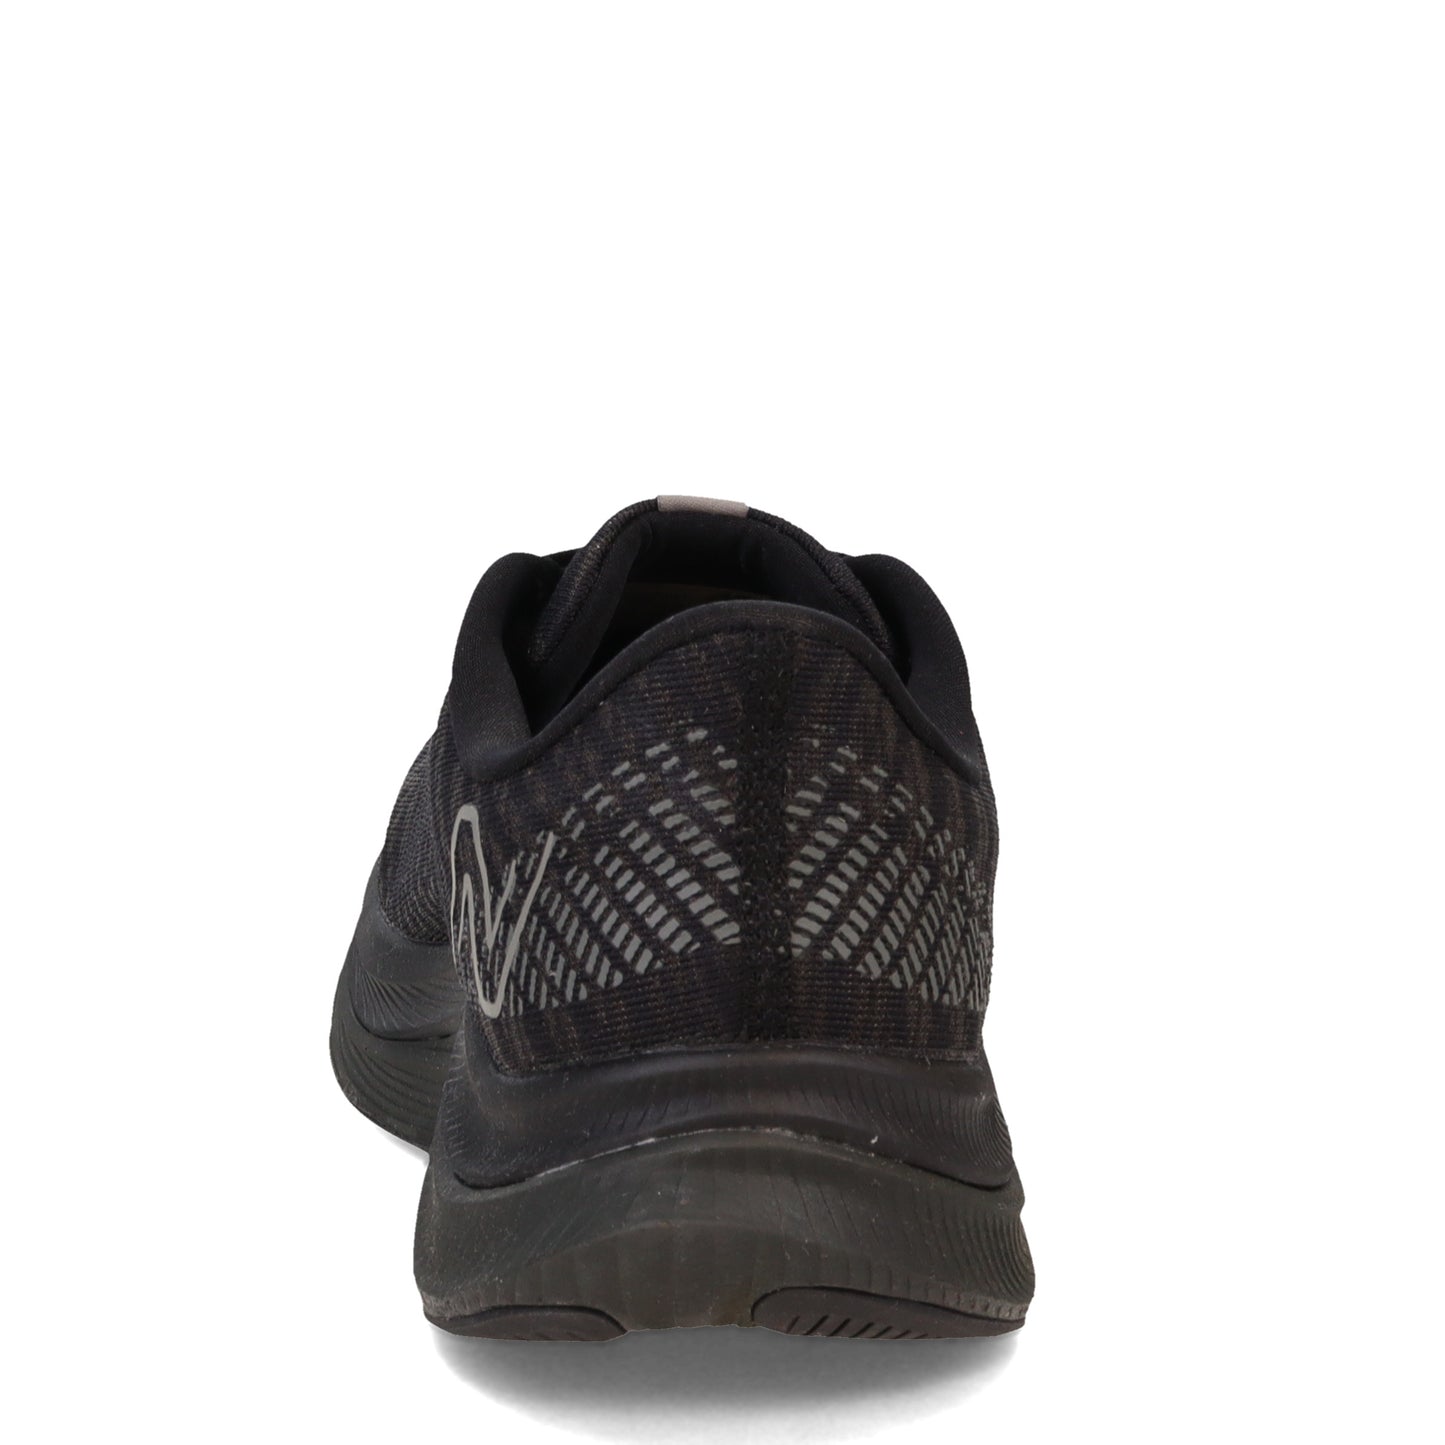 Peltz Shoes  Men's New Balance FuelCell Propel v4 Running Shoe BLACK GREY MFCPRCZ4